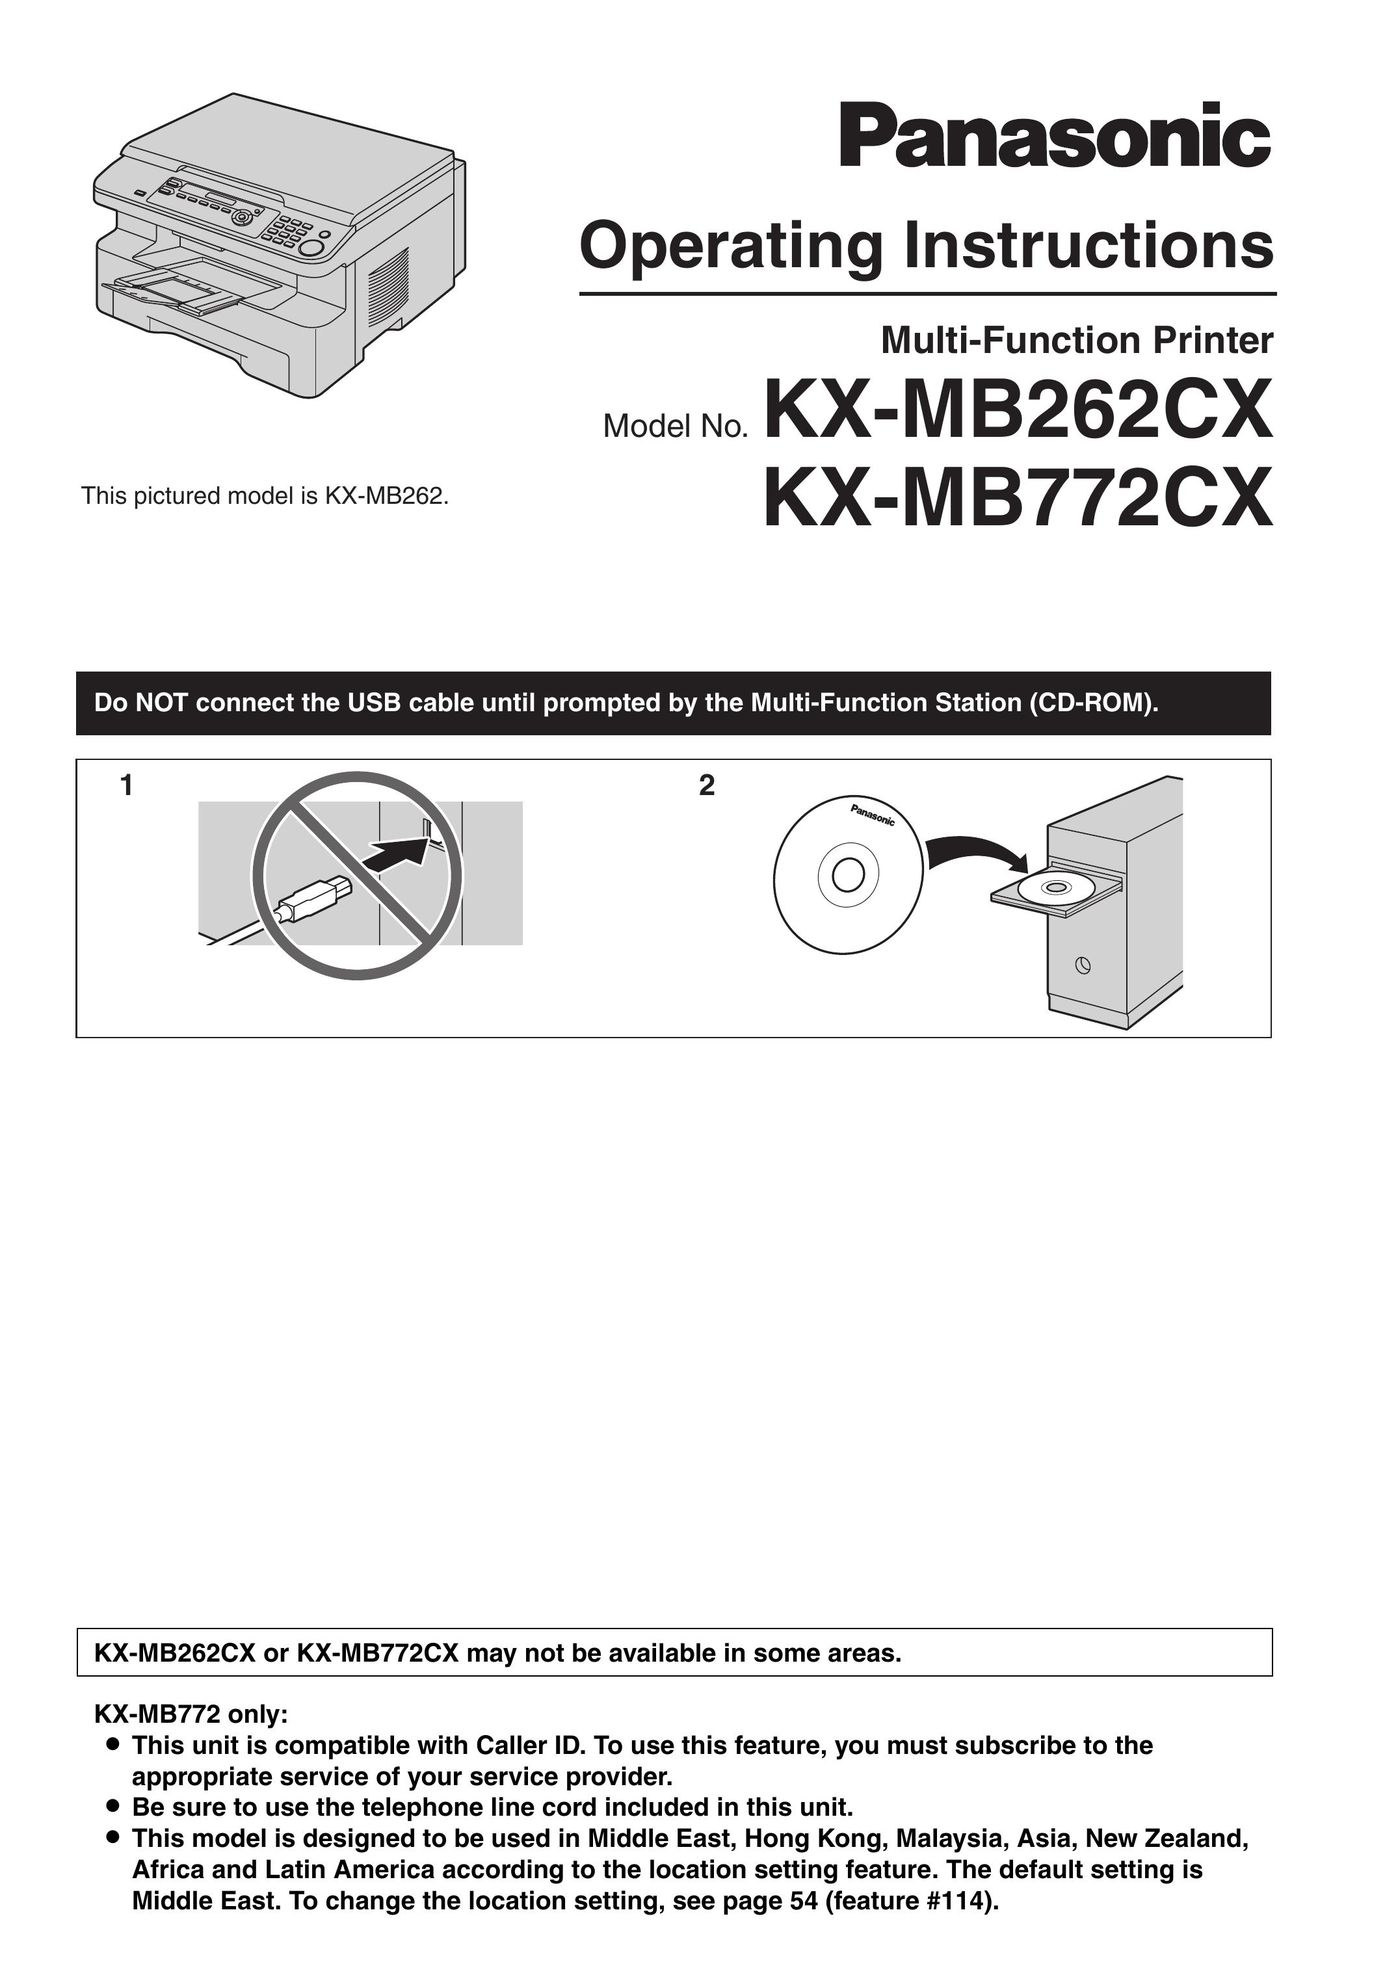 Panasonic KX-MB772CX Printer User Manual